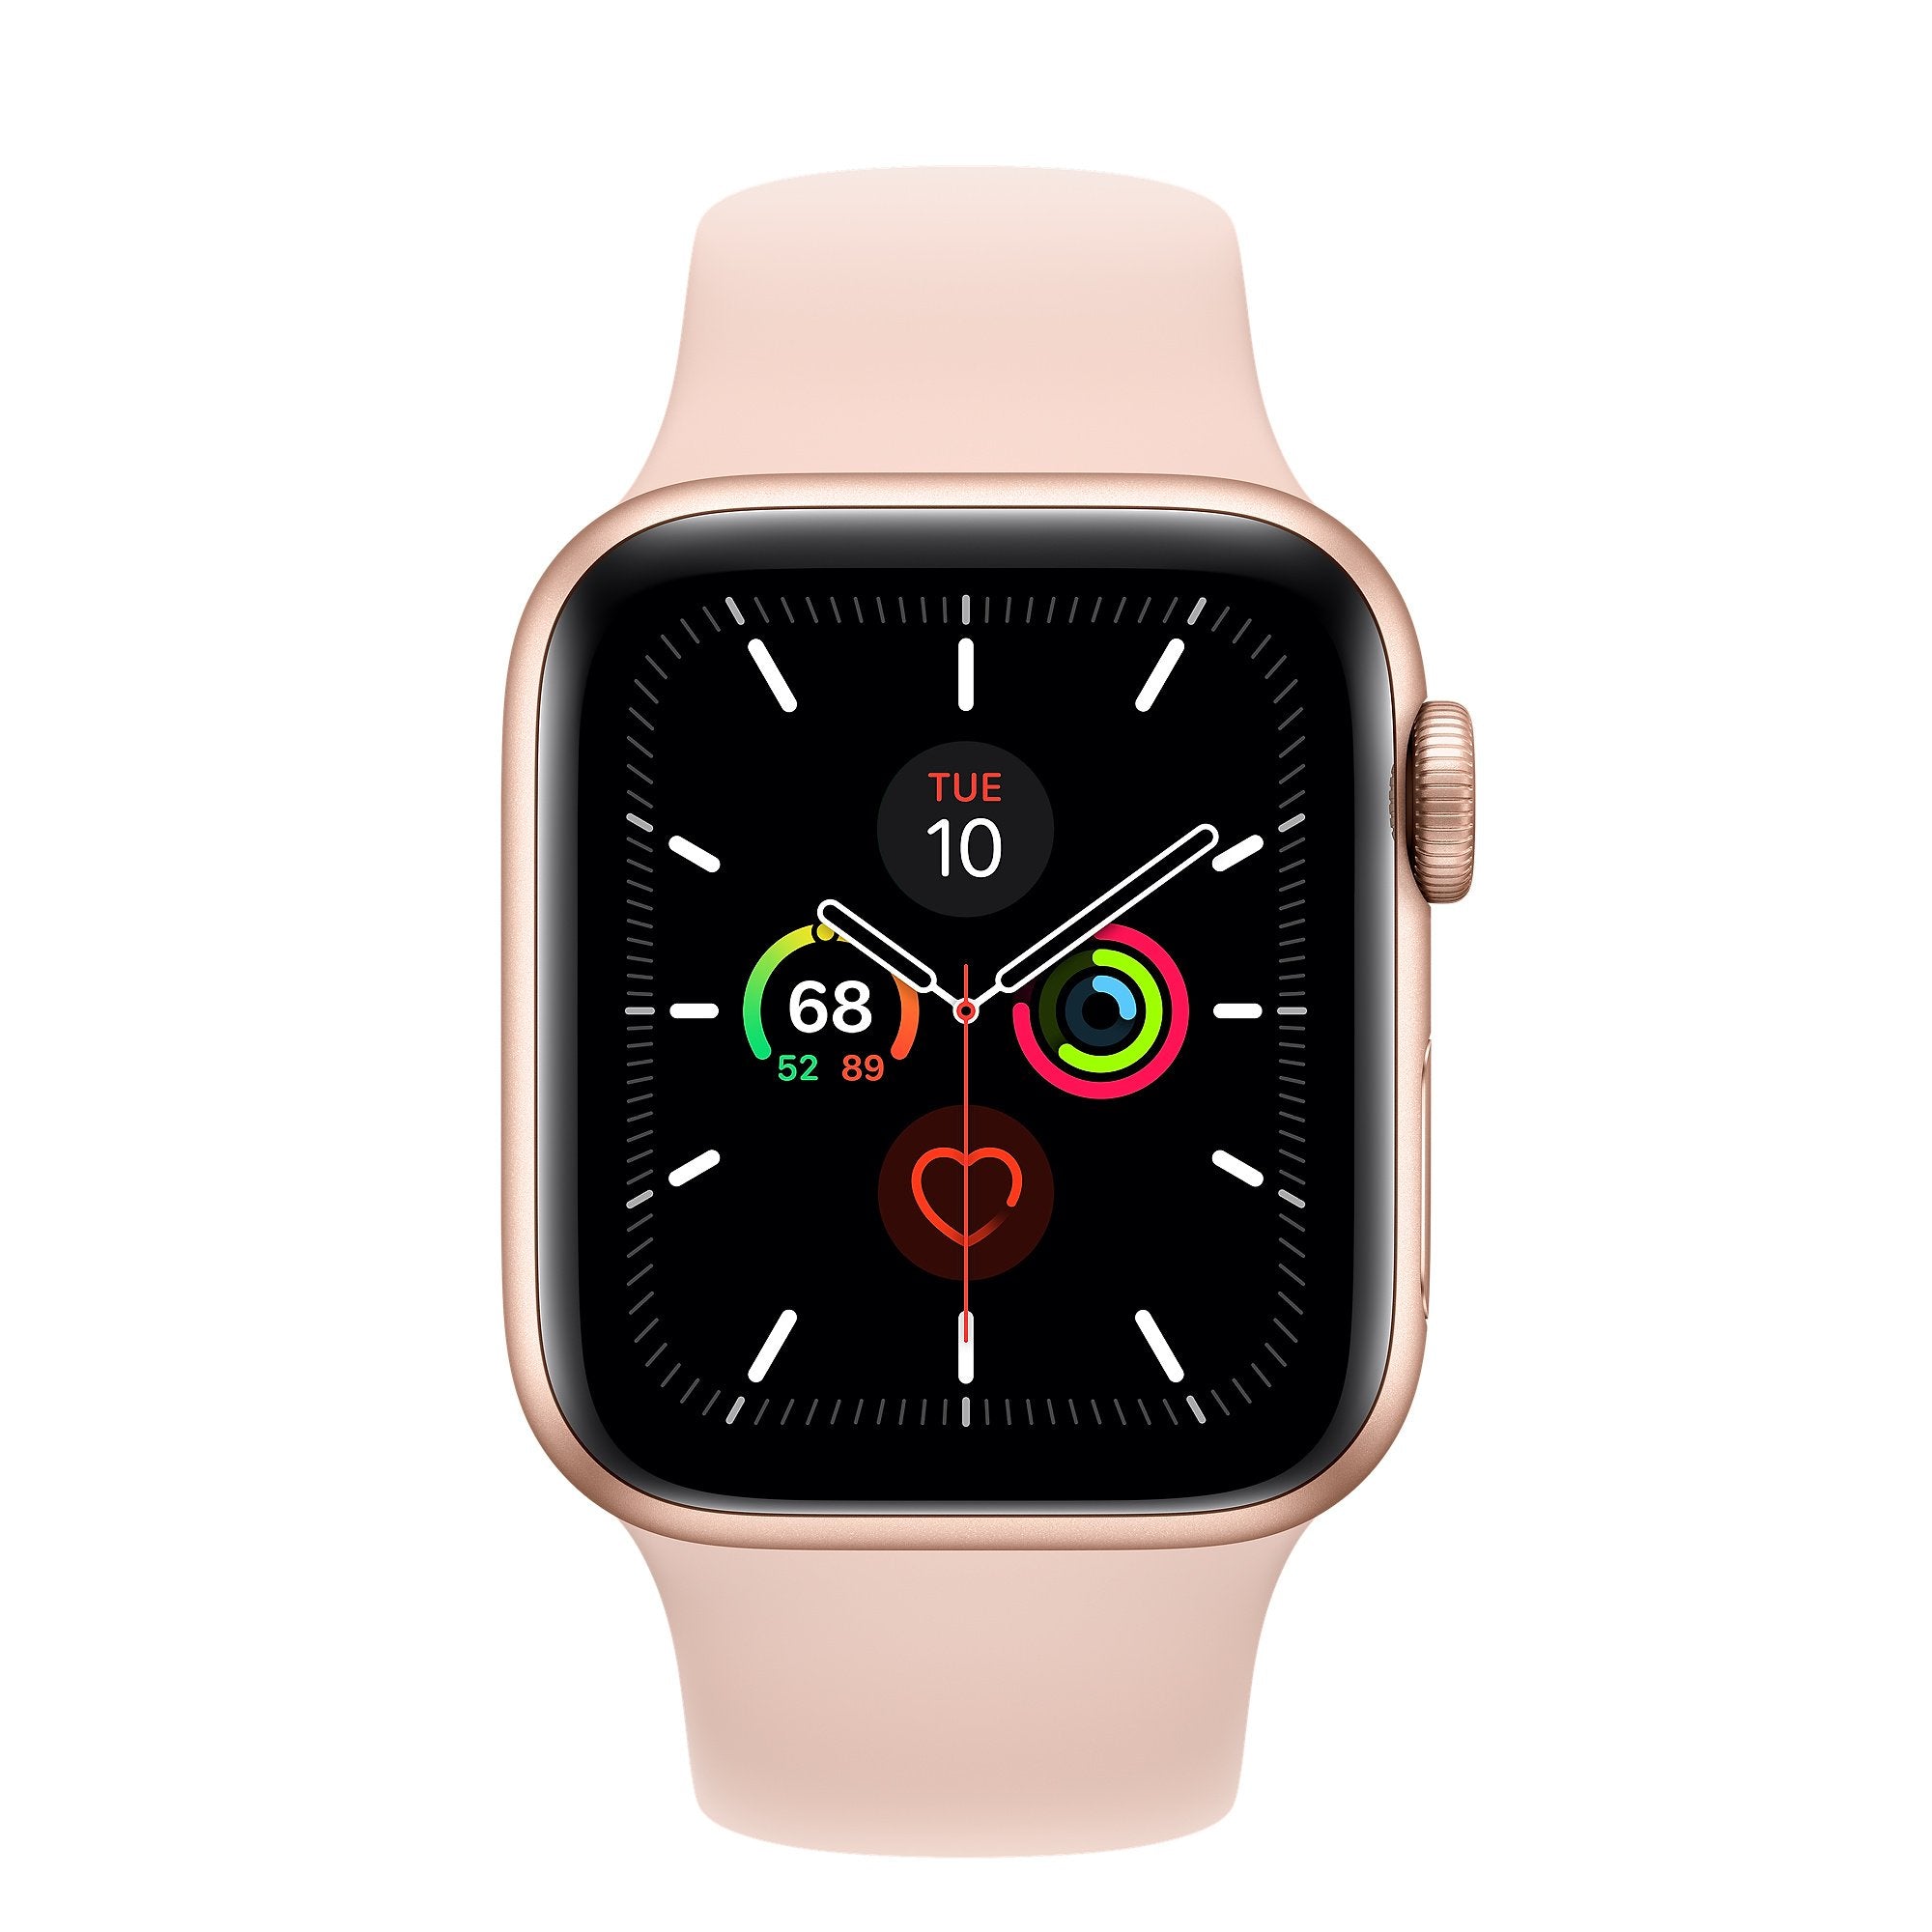 (純正品) Apple Watch series4 40mm GPS